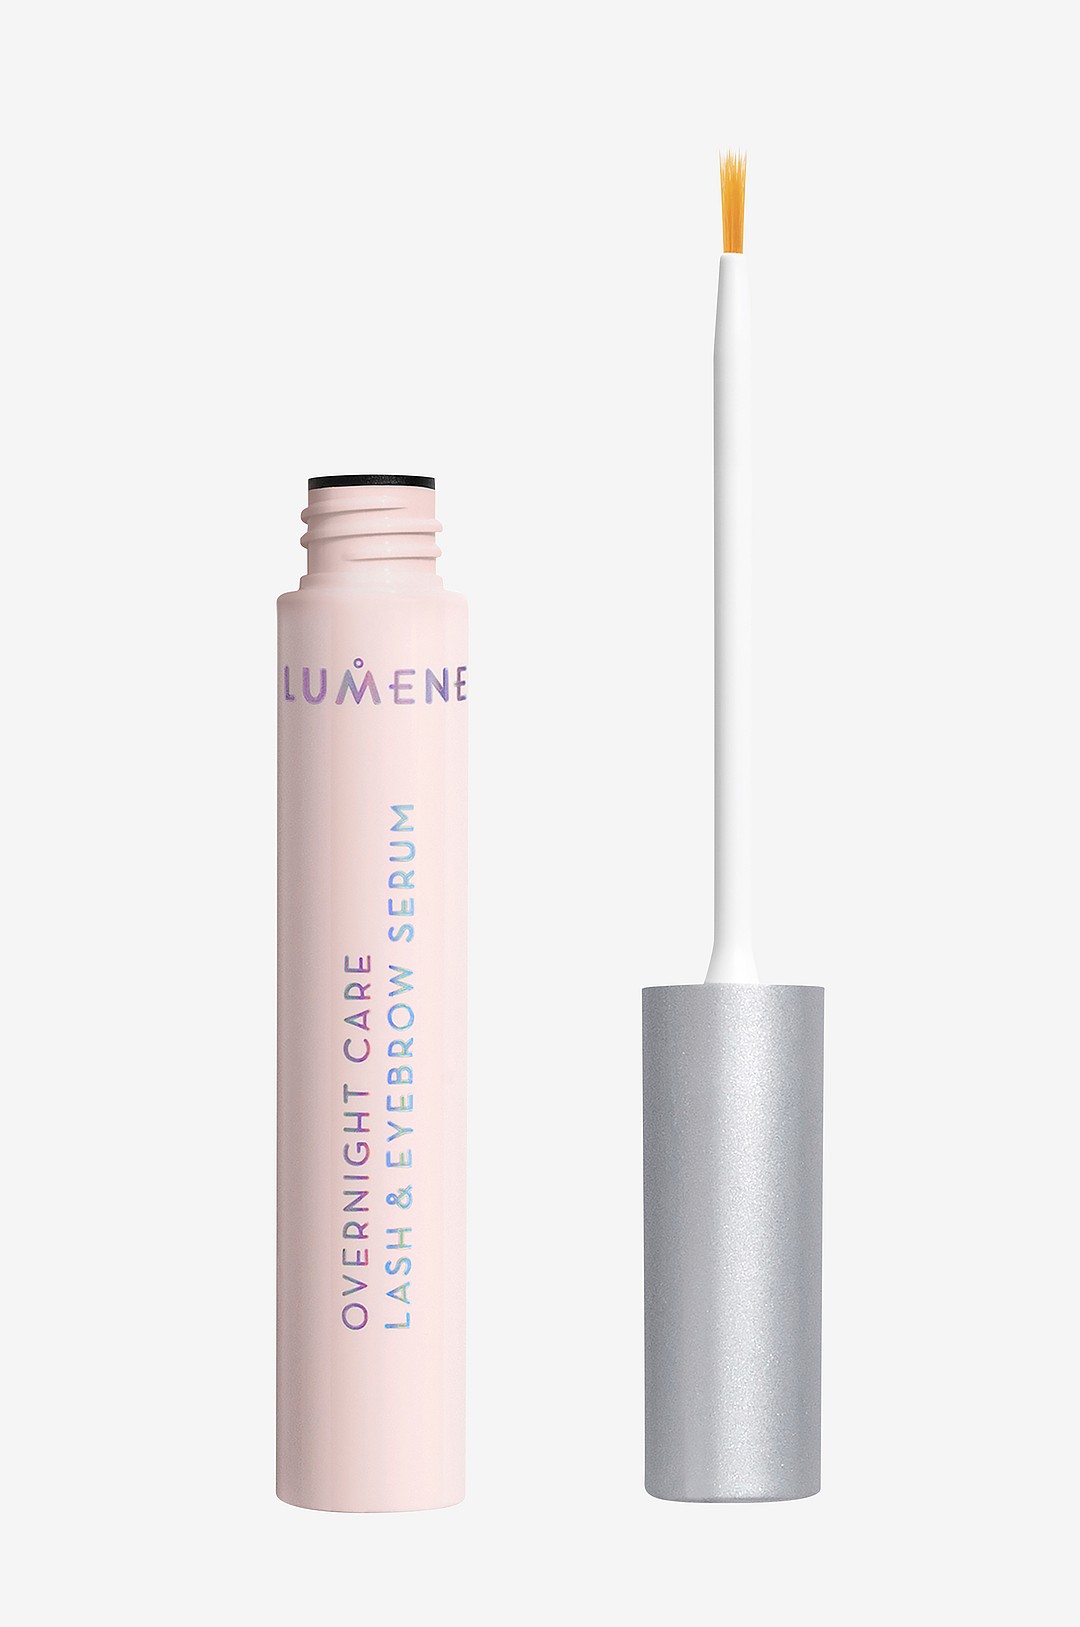 Lumene - Overnight Care Lash & Eyebrow Serum 5 ml - Transparent